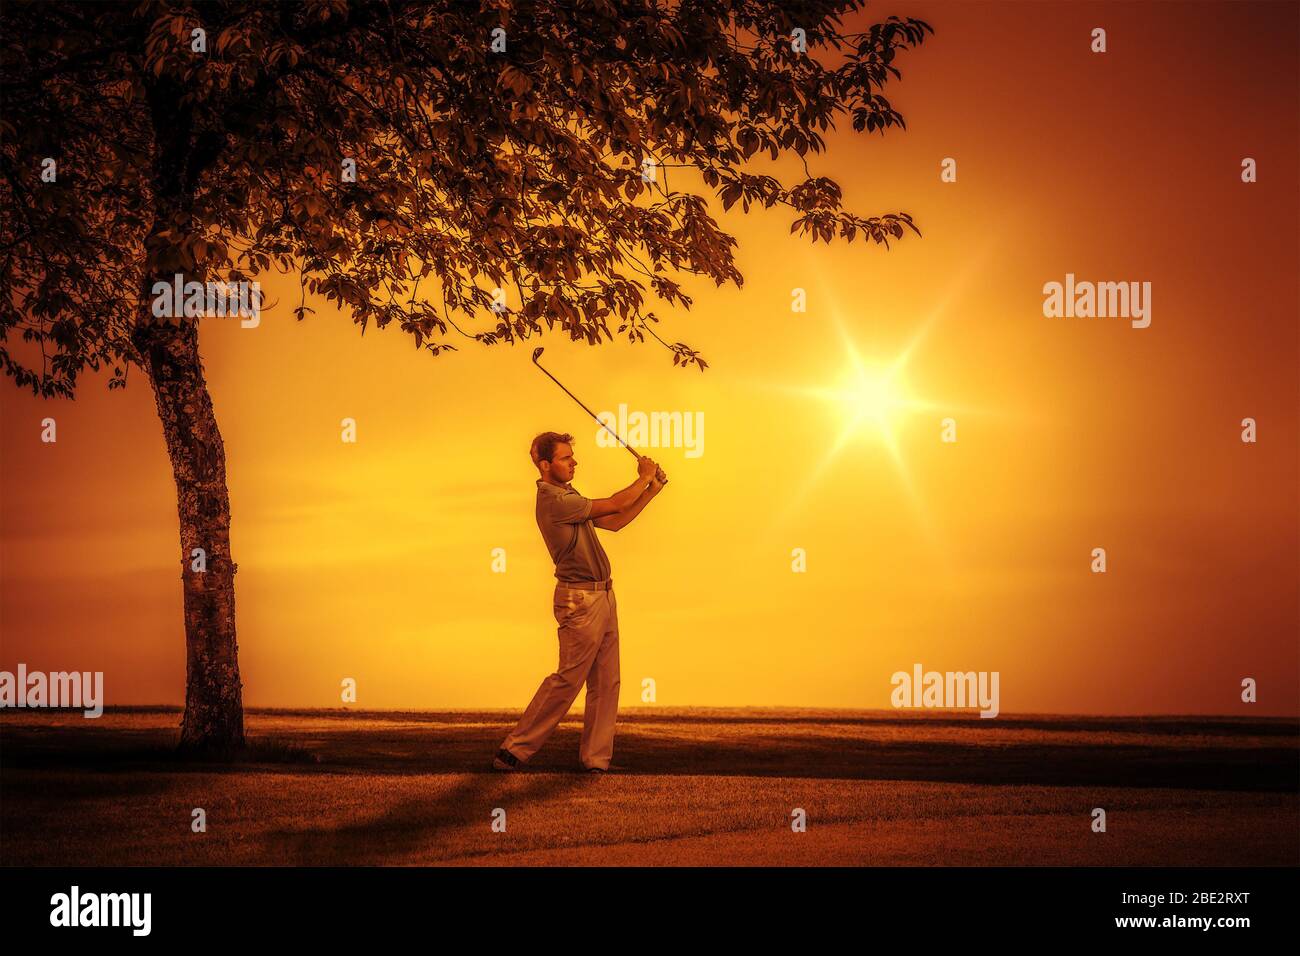 Ein Golfer bei Sonnenuntergang Banque D'Images